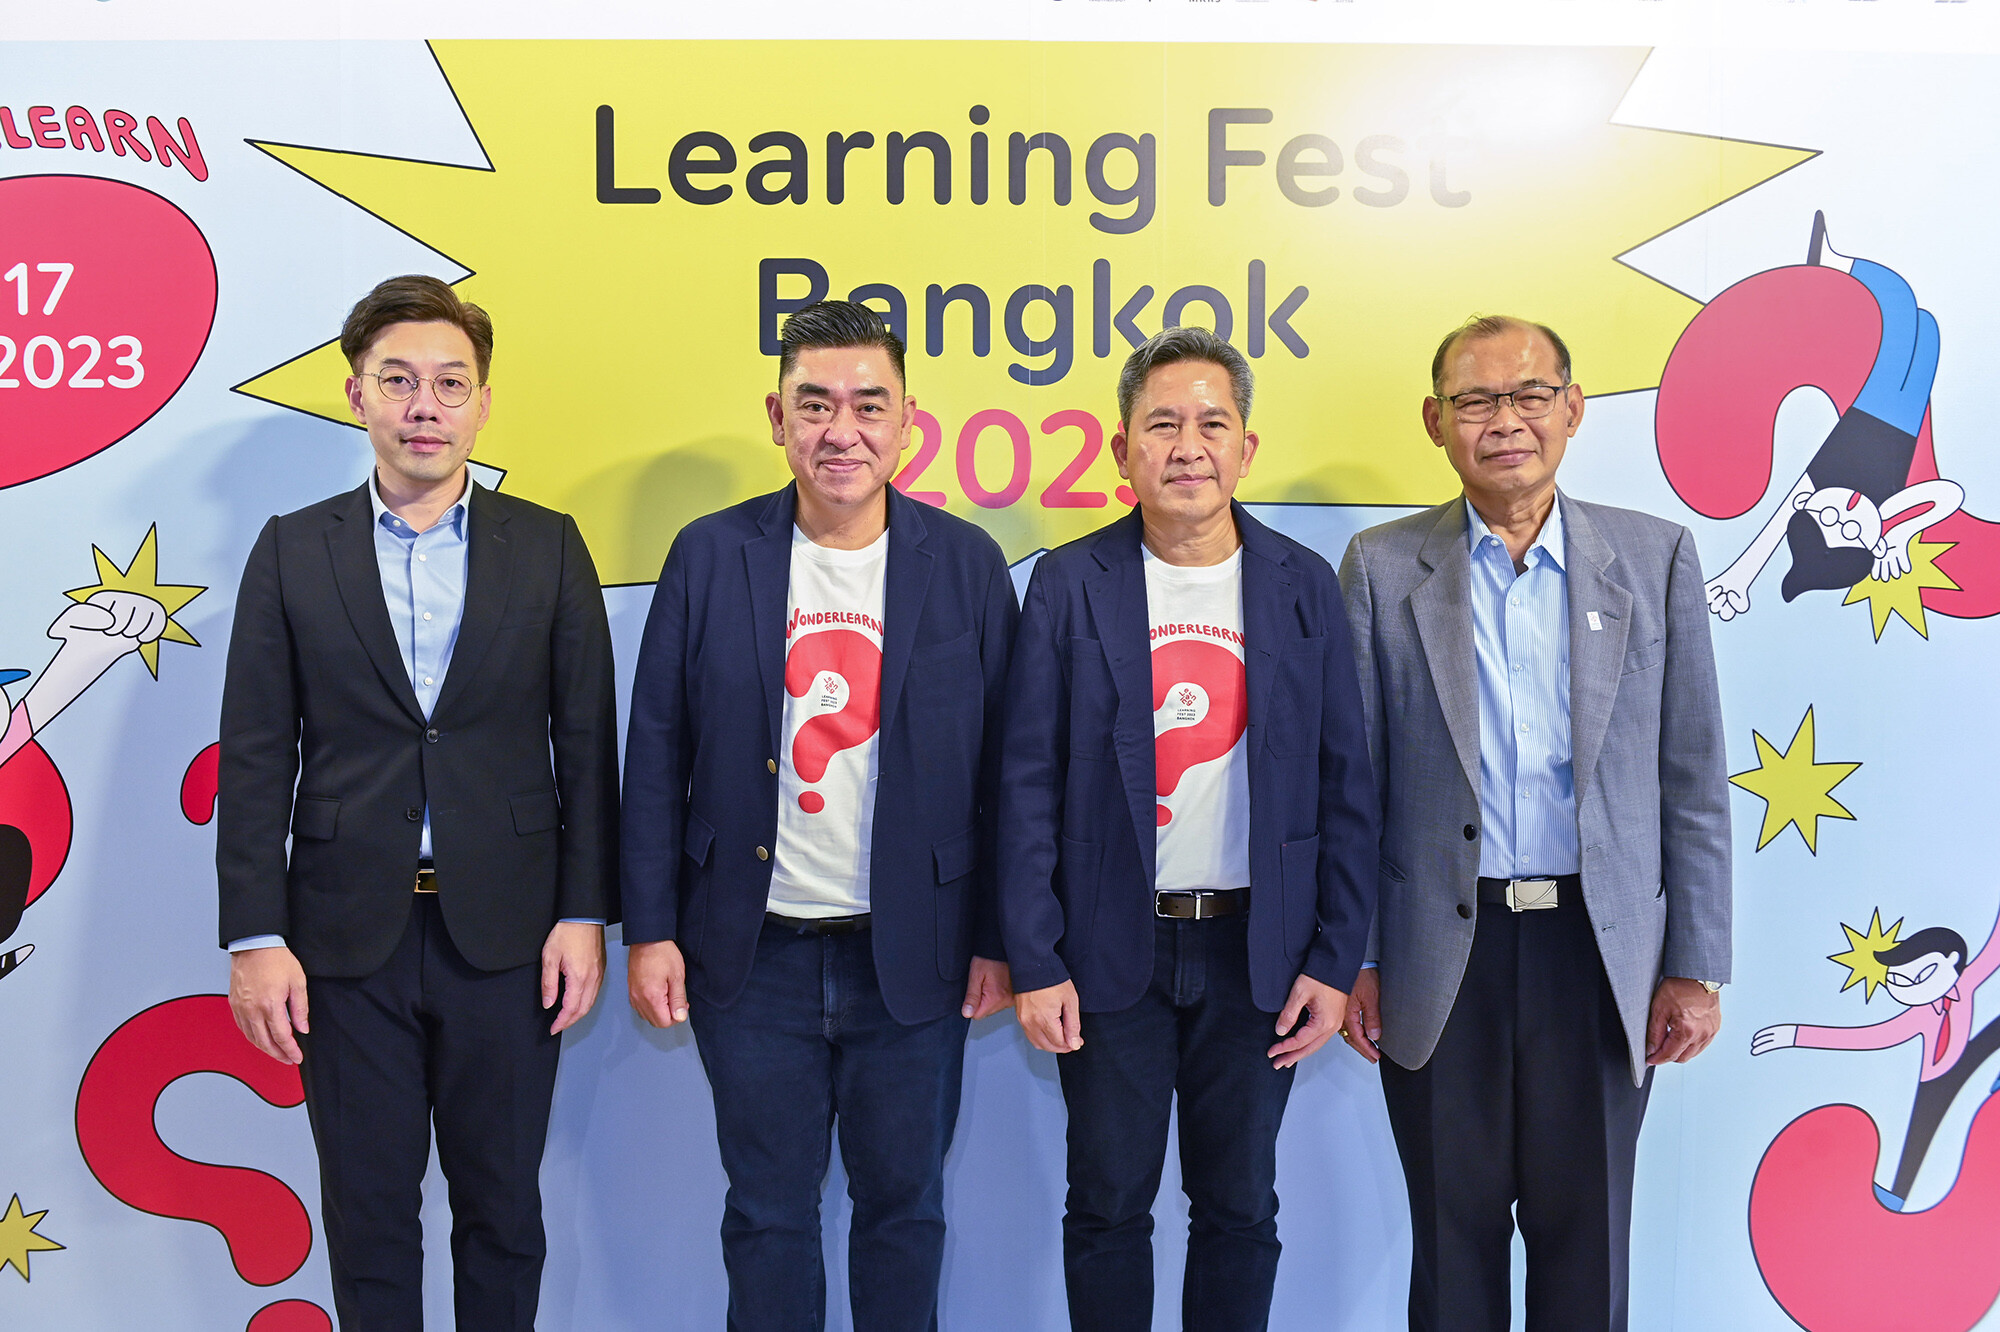 TK Park จัดงาน "Learning Fest Bangkok 2023" เทศกาลปลุกพลังเอ๊ะ ครั้งแรกในไทย